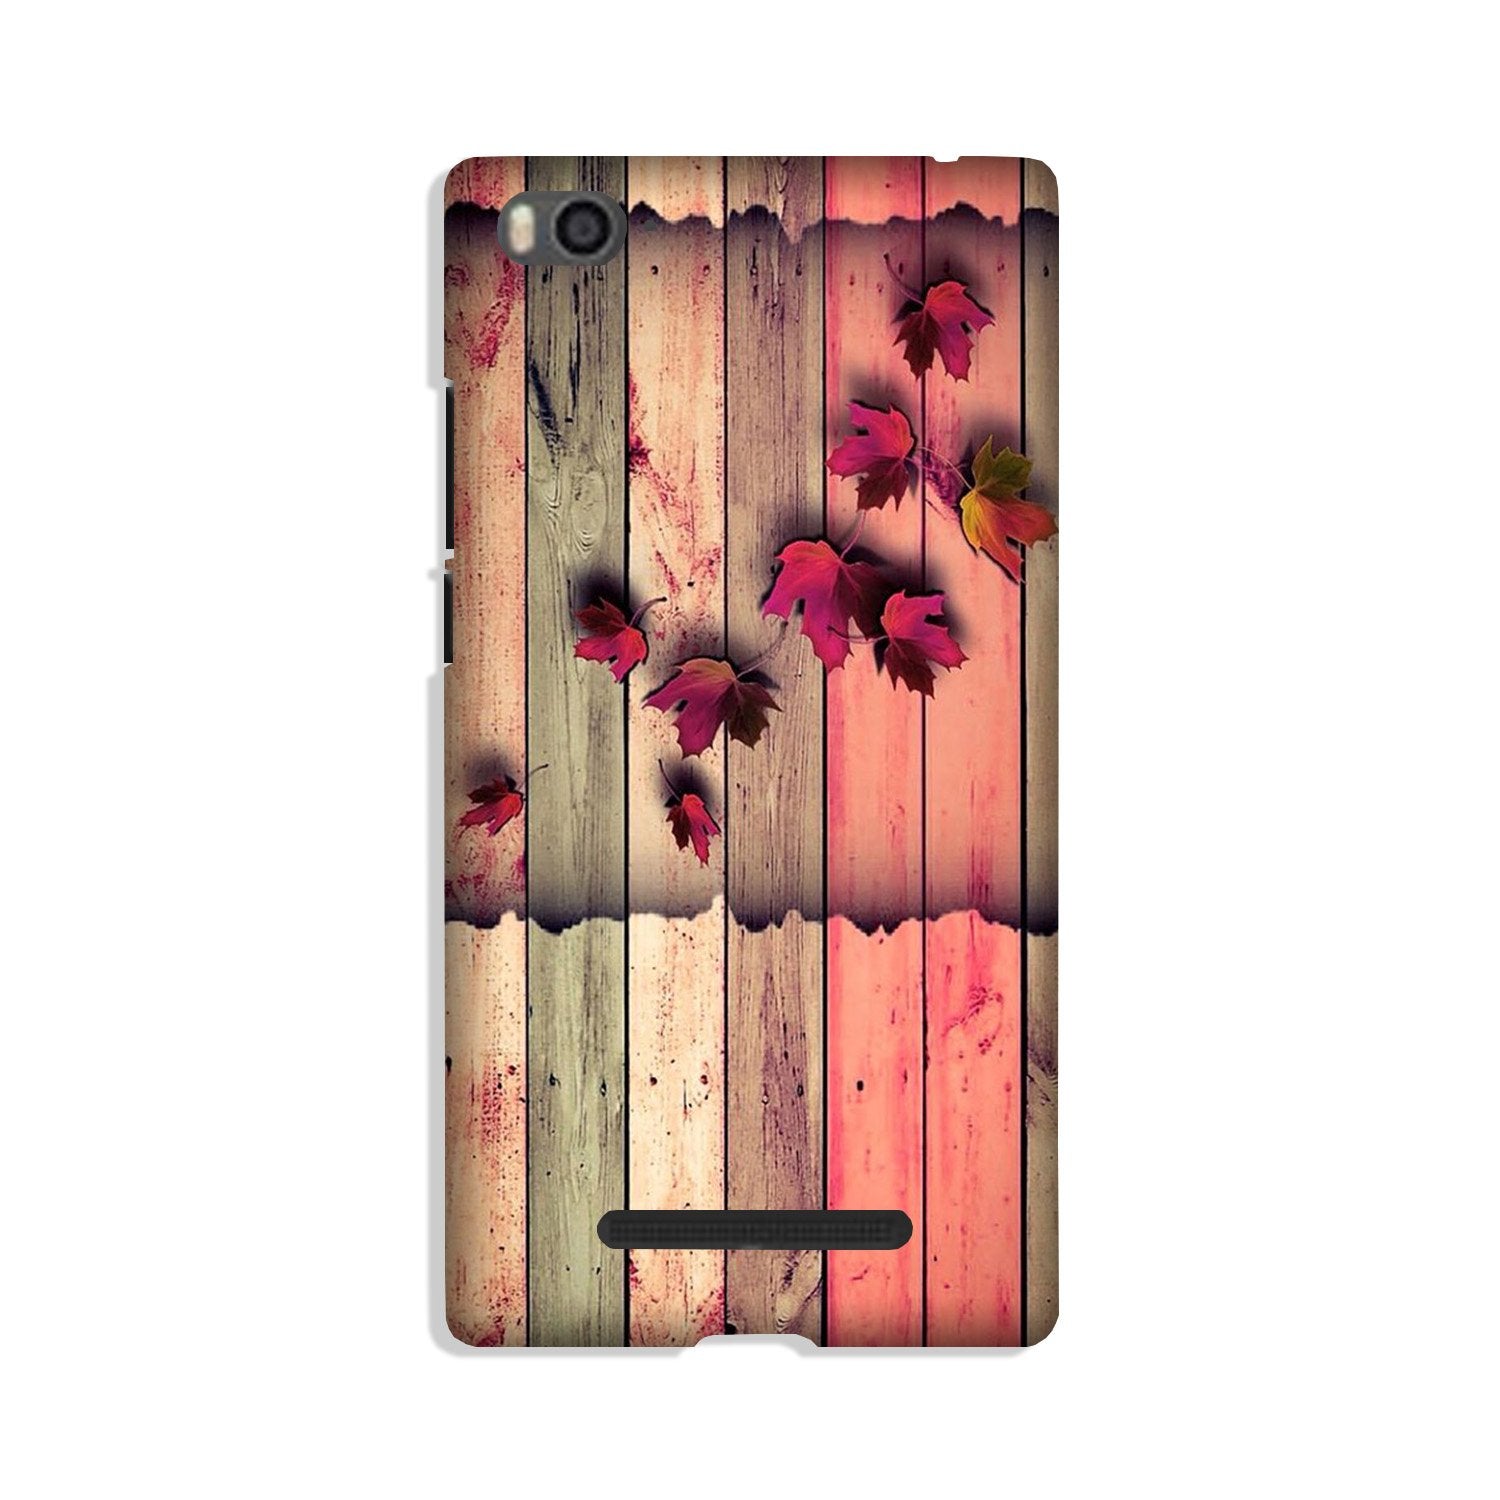 Wooden look2 Case for Xiaomi Mi 4i